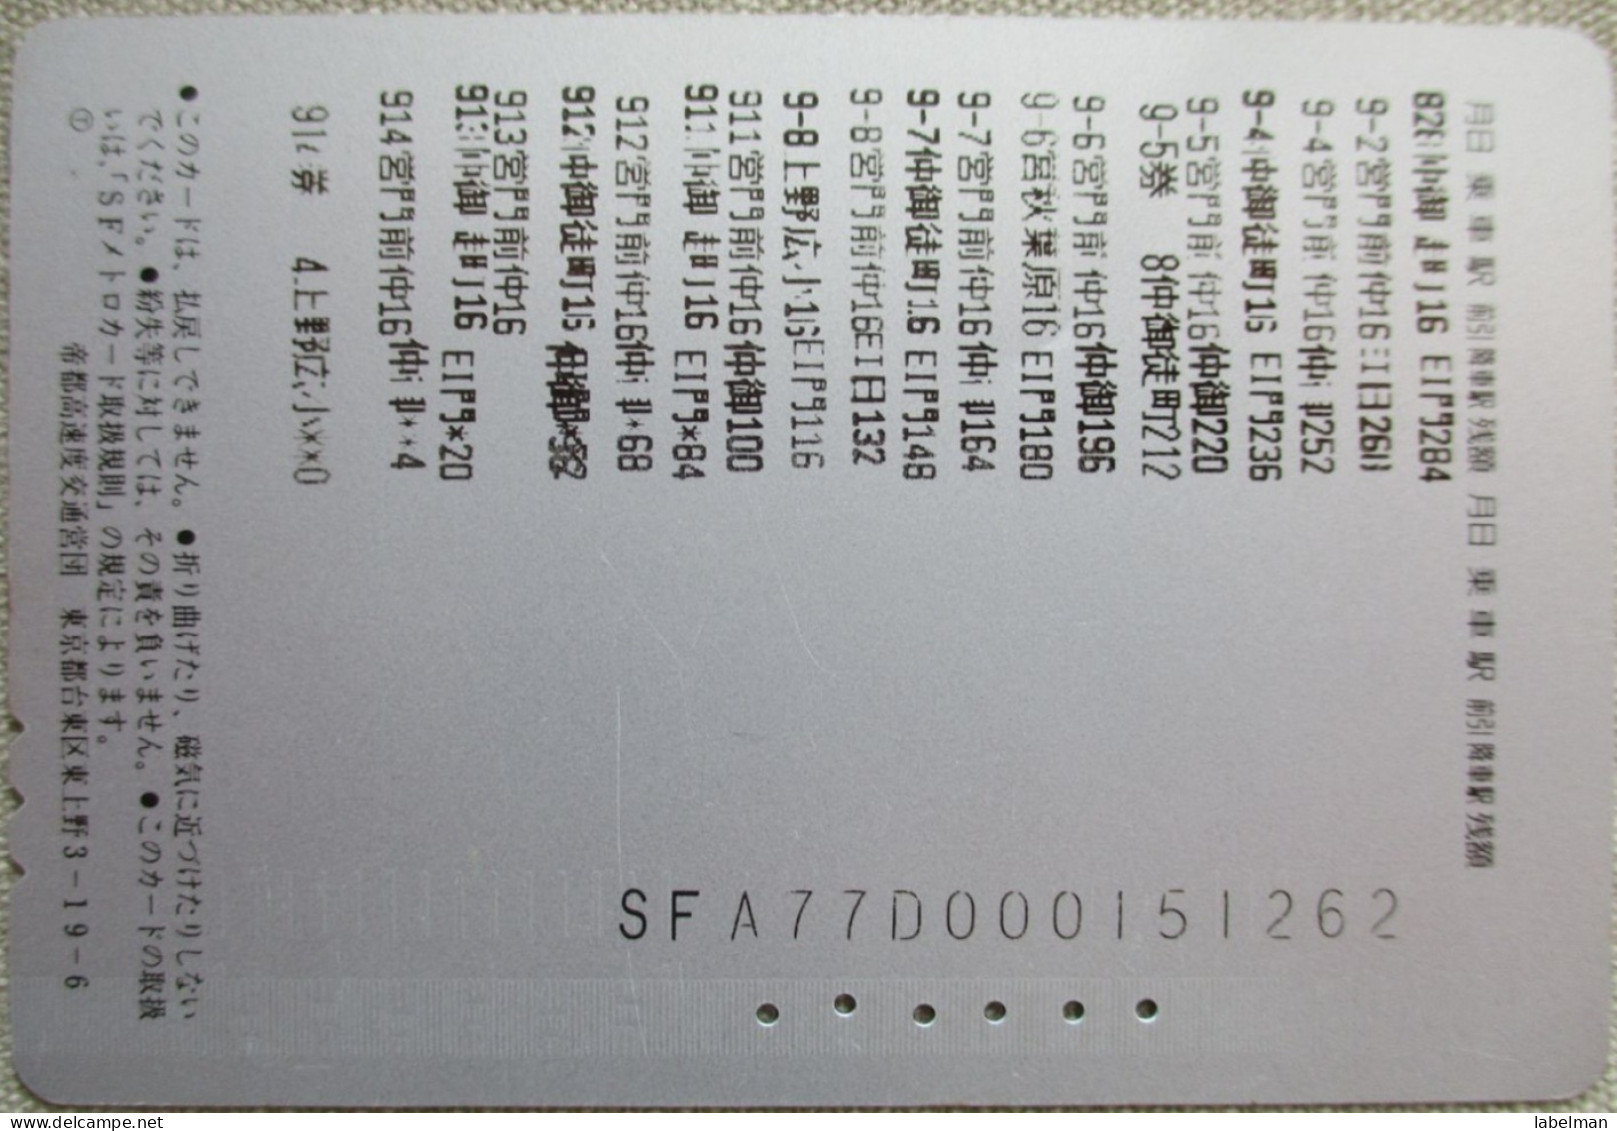 JAPAN TRANSPORTATION BUS METRO TRAIN RAIL LOCO LOCOMOTIVE BAHN TICKET TARJETA CARD CARTELA CARD CARTE KARTE COLLECTOR - Tickets D'entrée